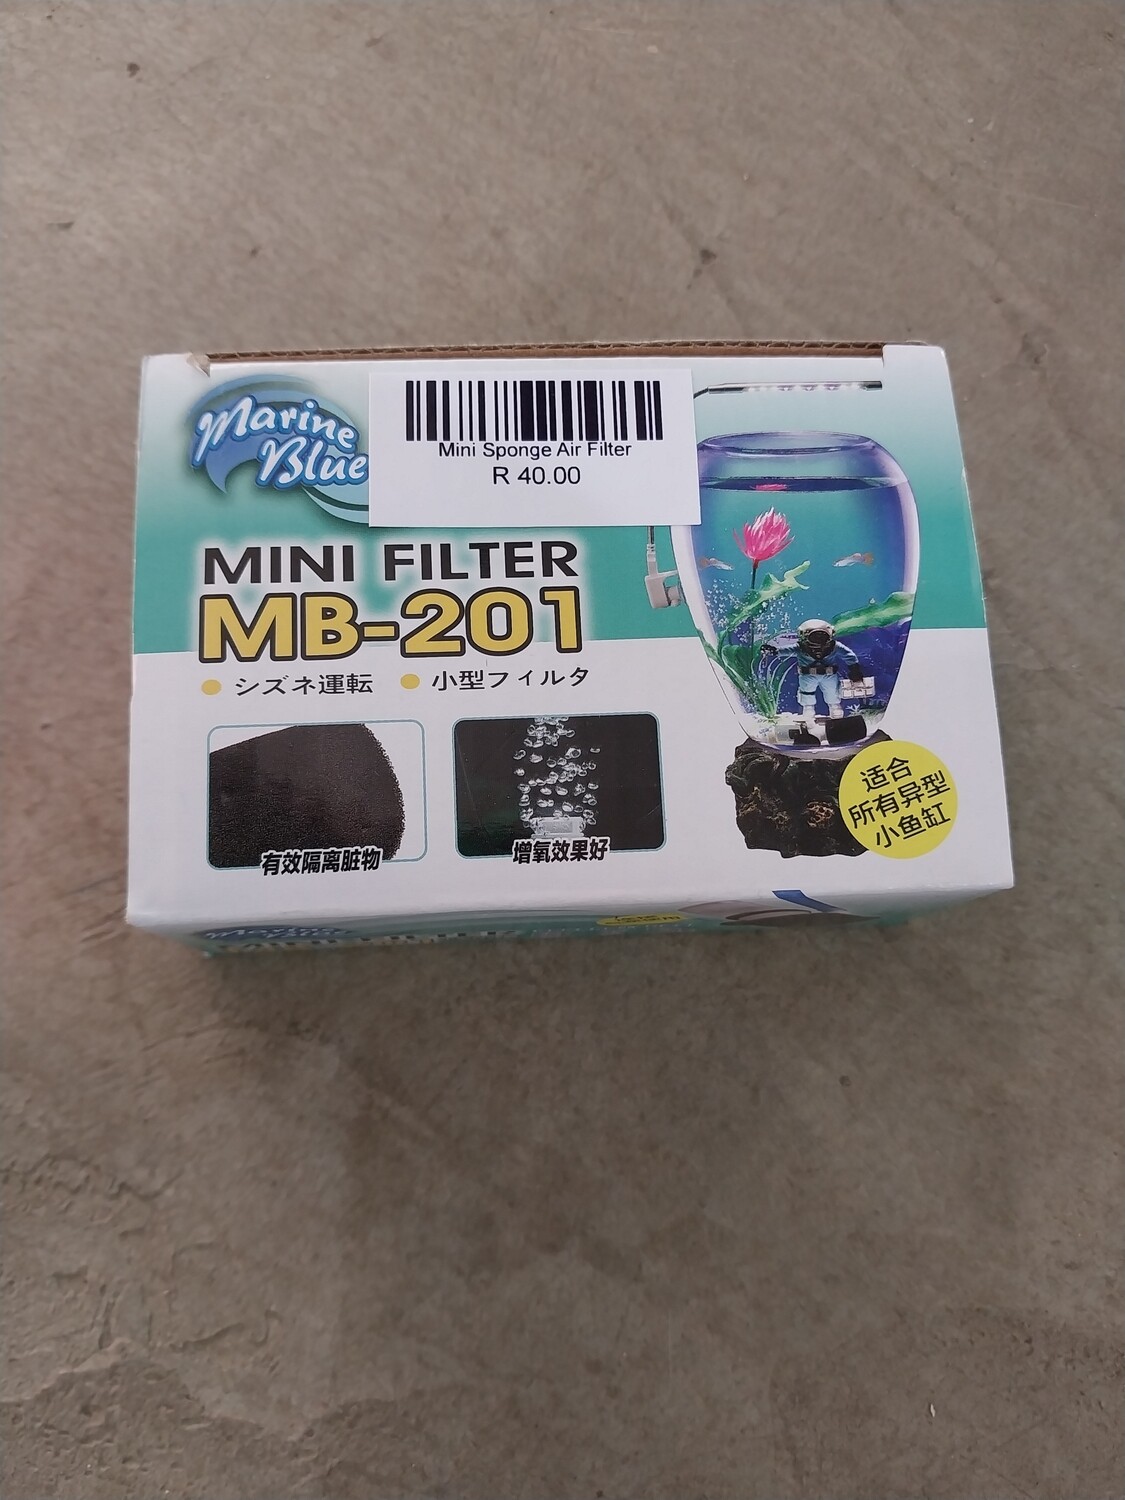 Mini Sponge Air Filter